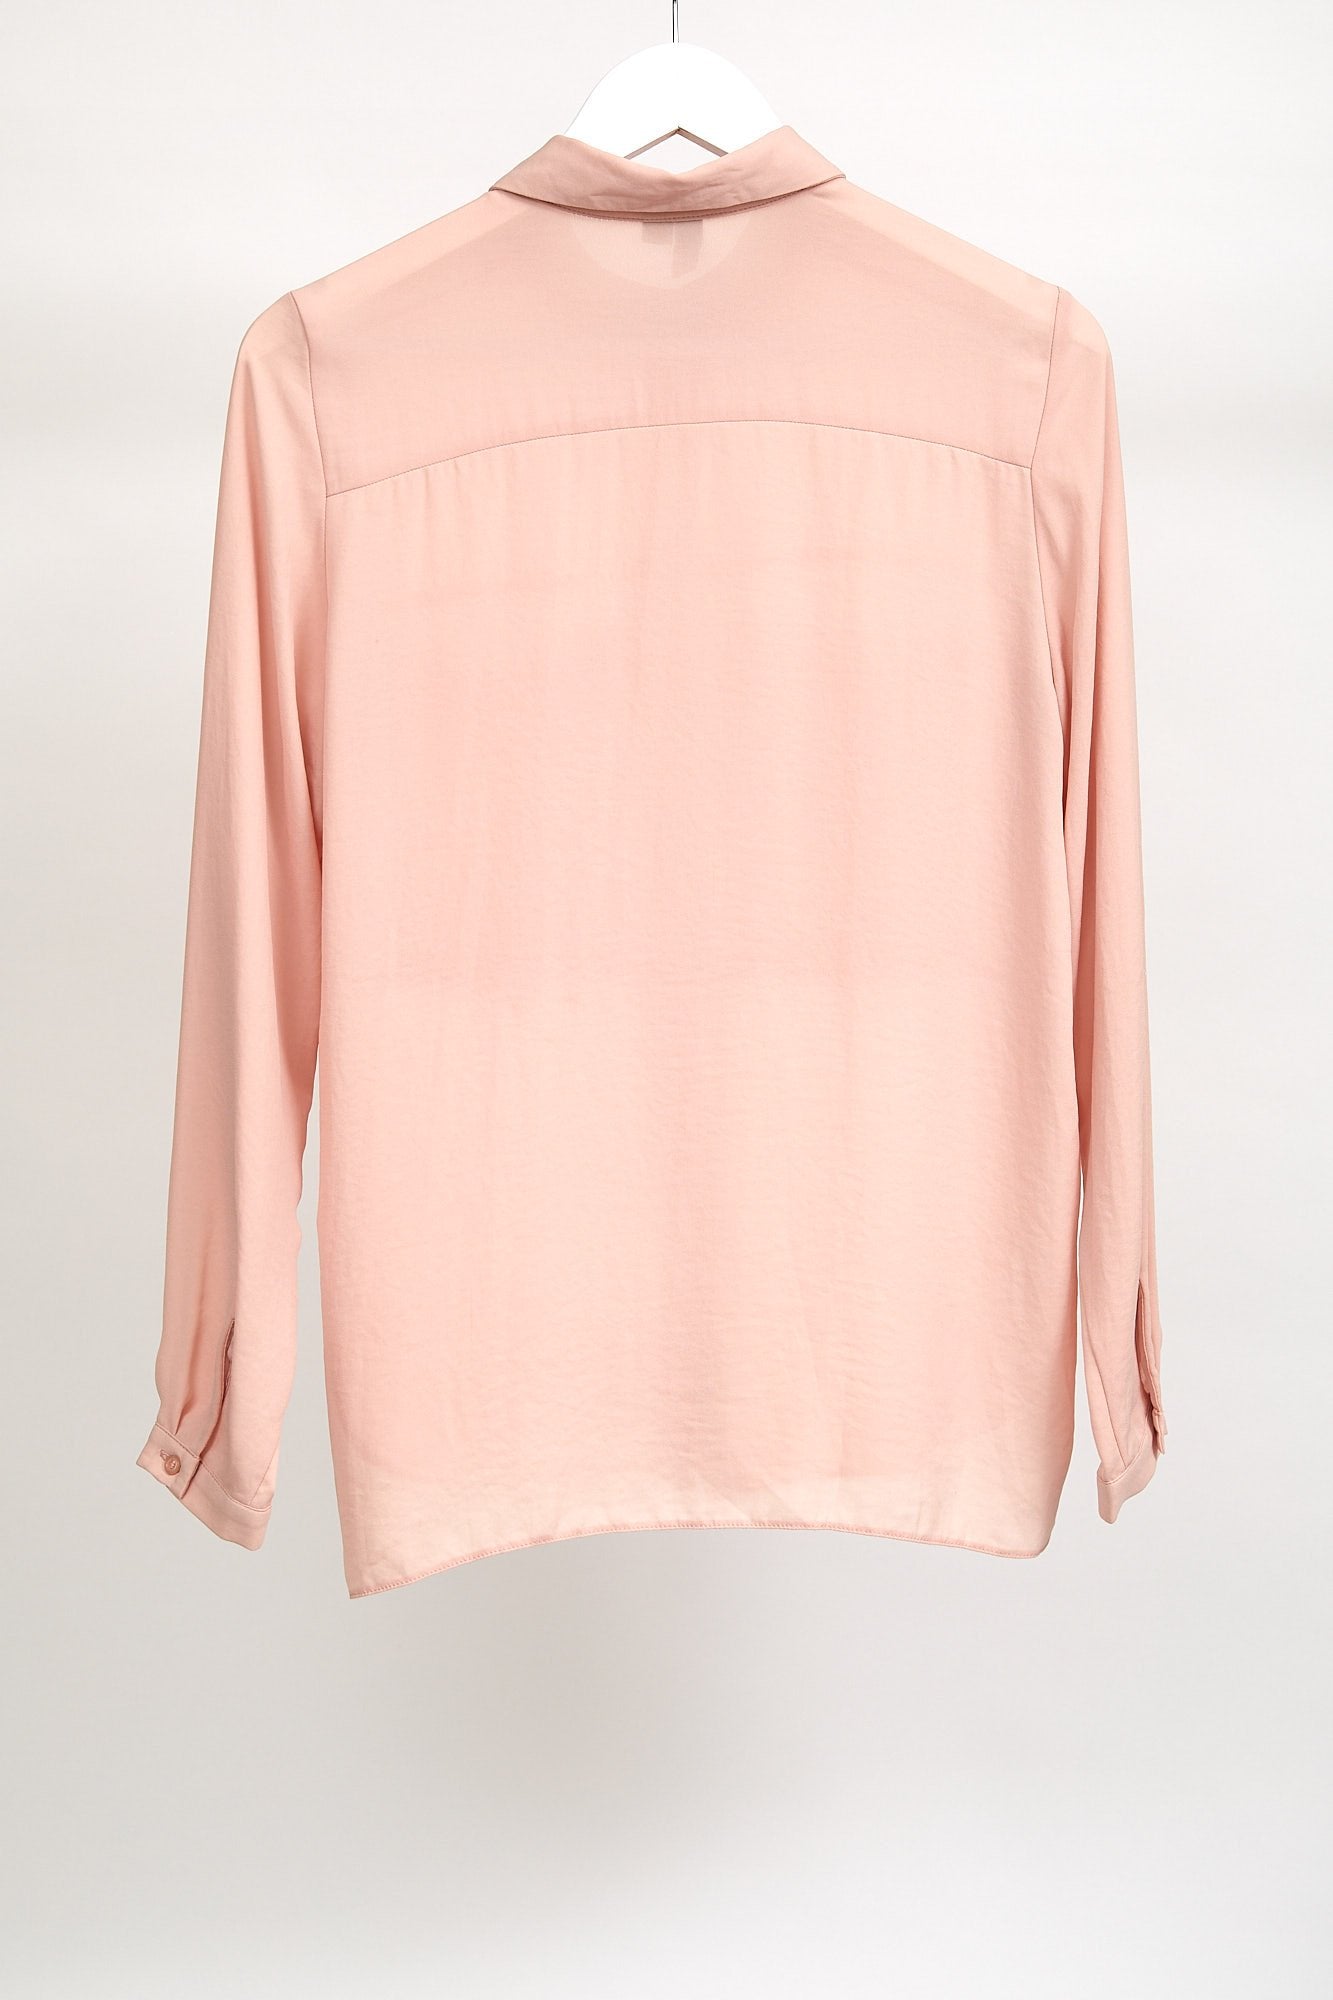 Womens ASOS Pink Shirt: Size Small